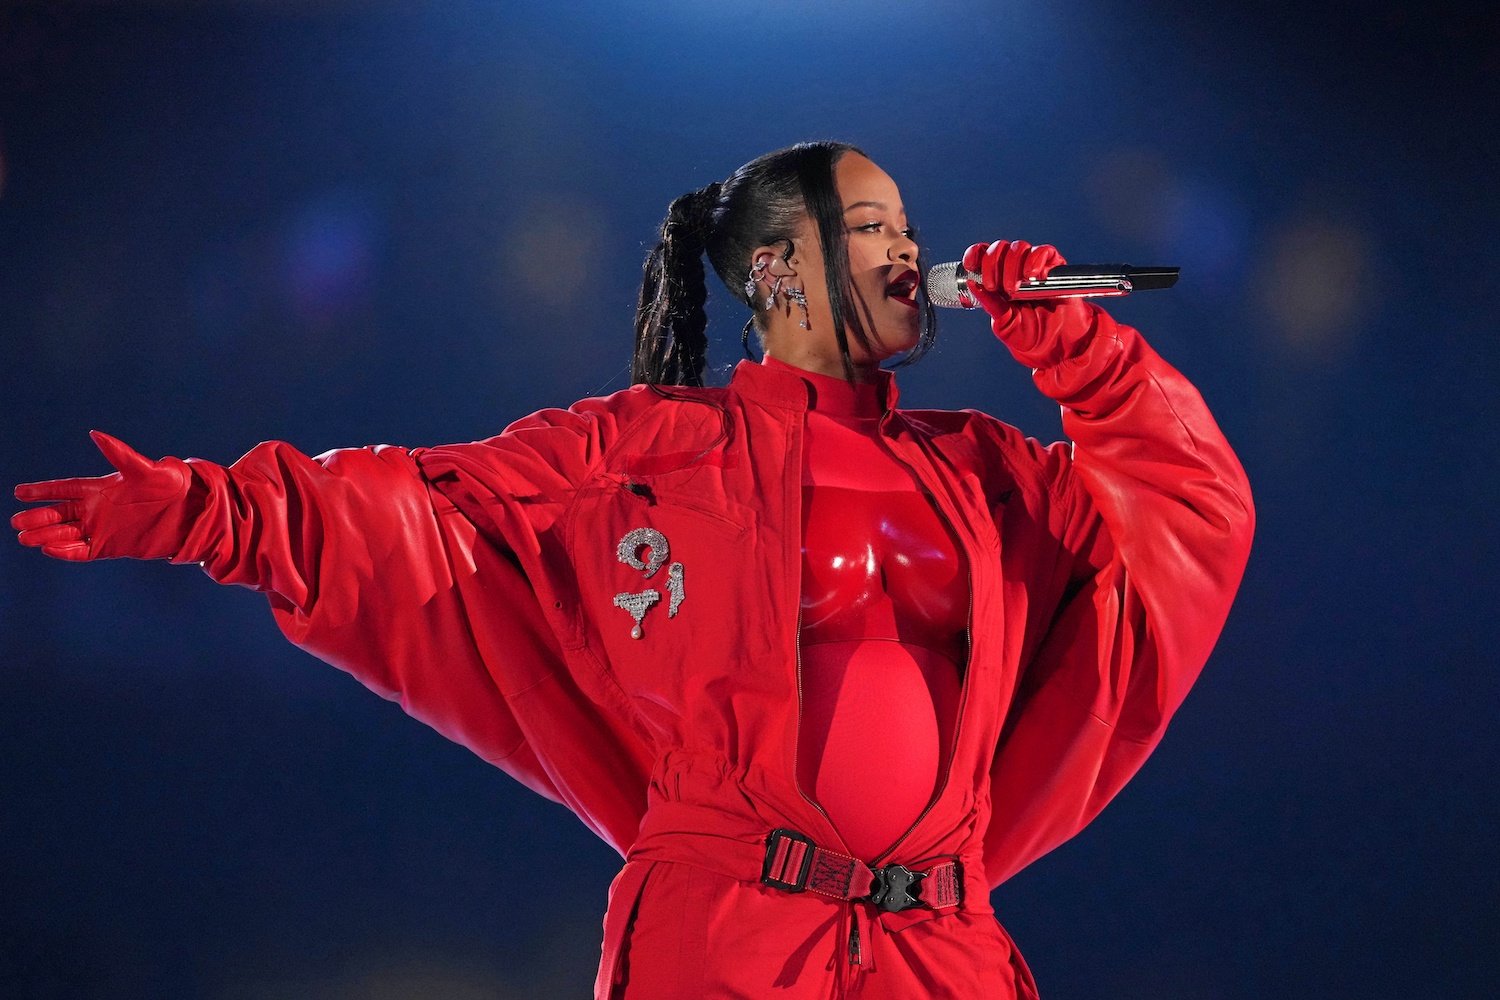 Feb 12, 2023; Glendale, Arizona, US; Recordist artist Rihanna performs during the halftime show of Super Bowl LVII at State Farm Stadium. Mandatory Credit: Kirby Lee-USA TODAY Sports